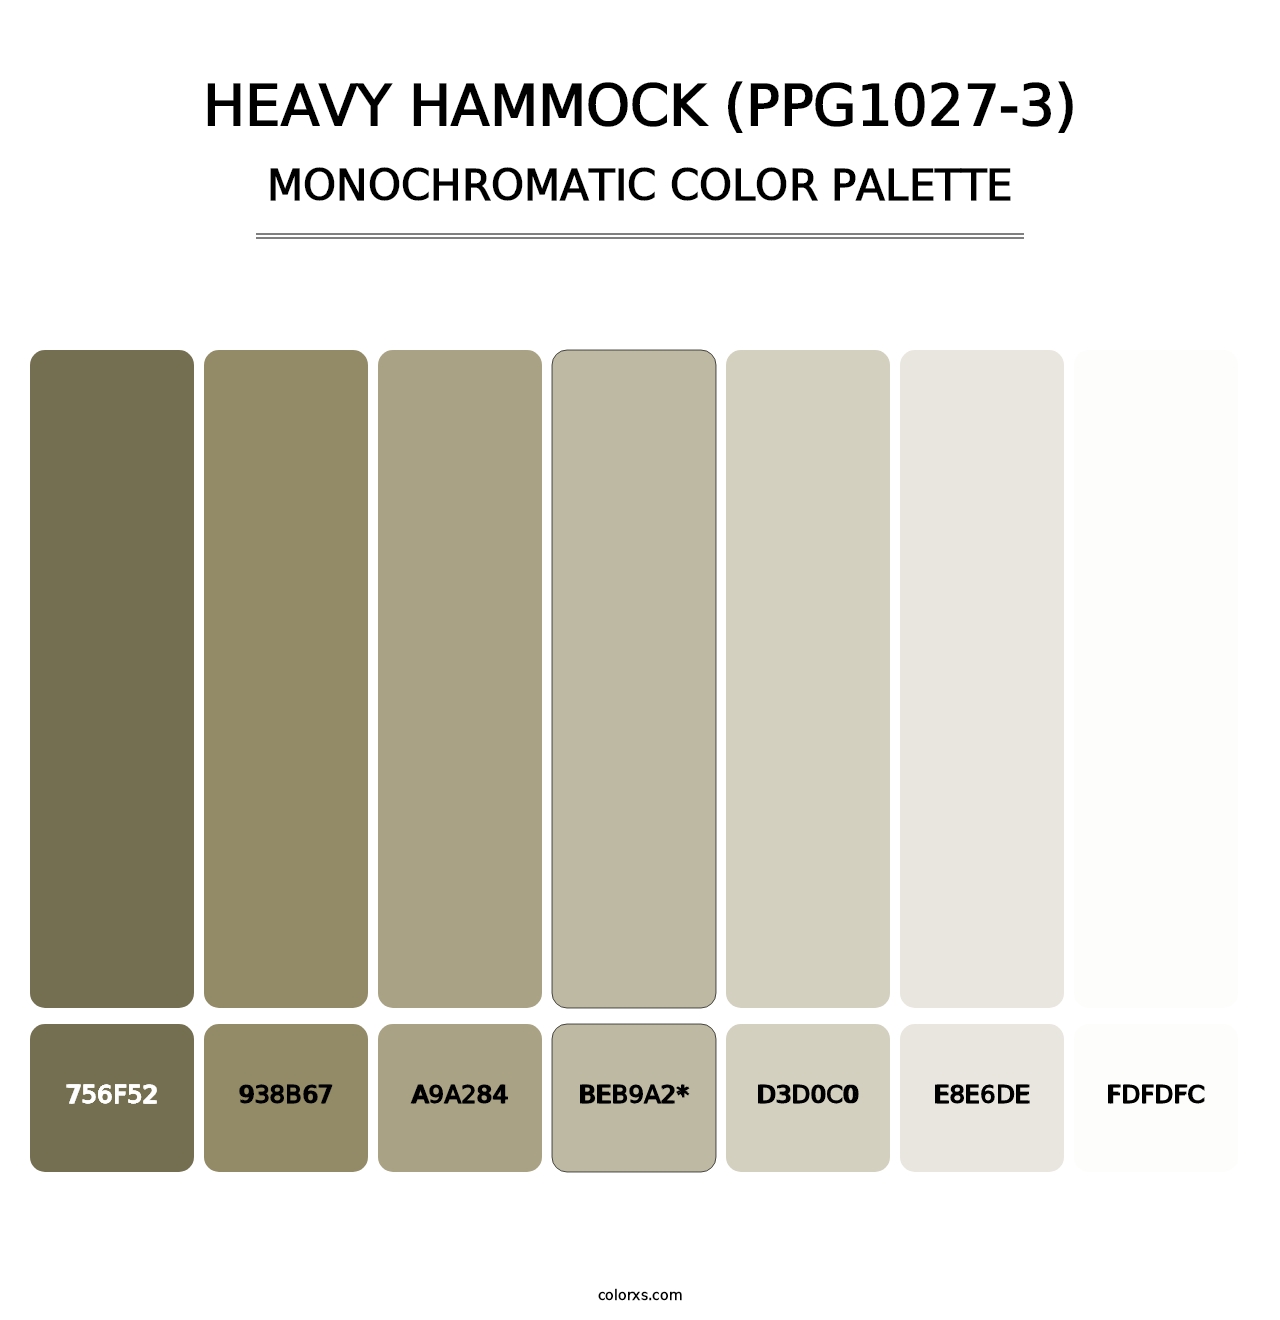 Heavy Hammock (PPG1027-3) - Monochromatic Color Palette